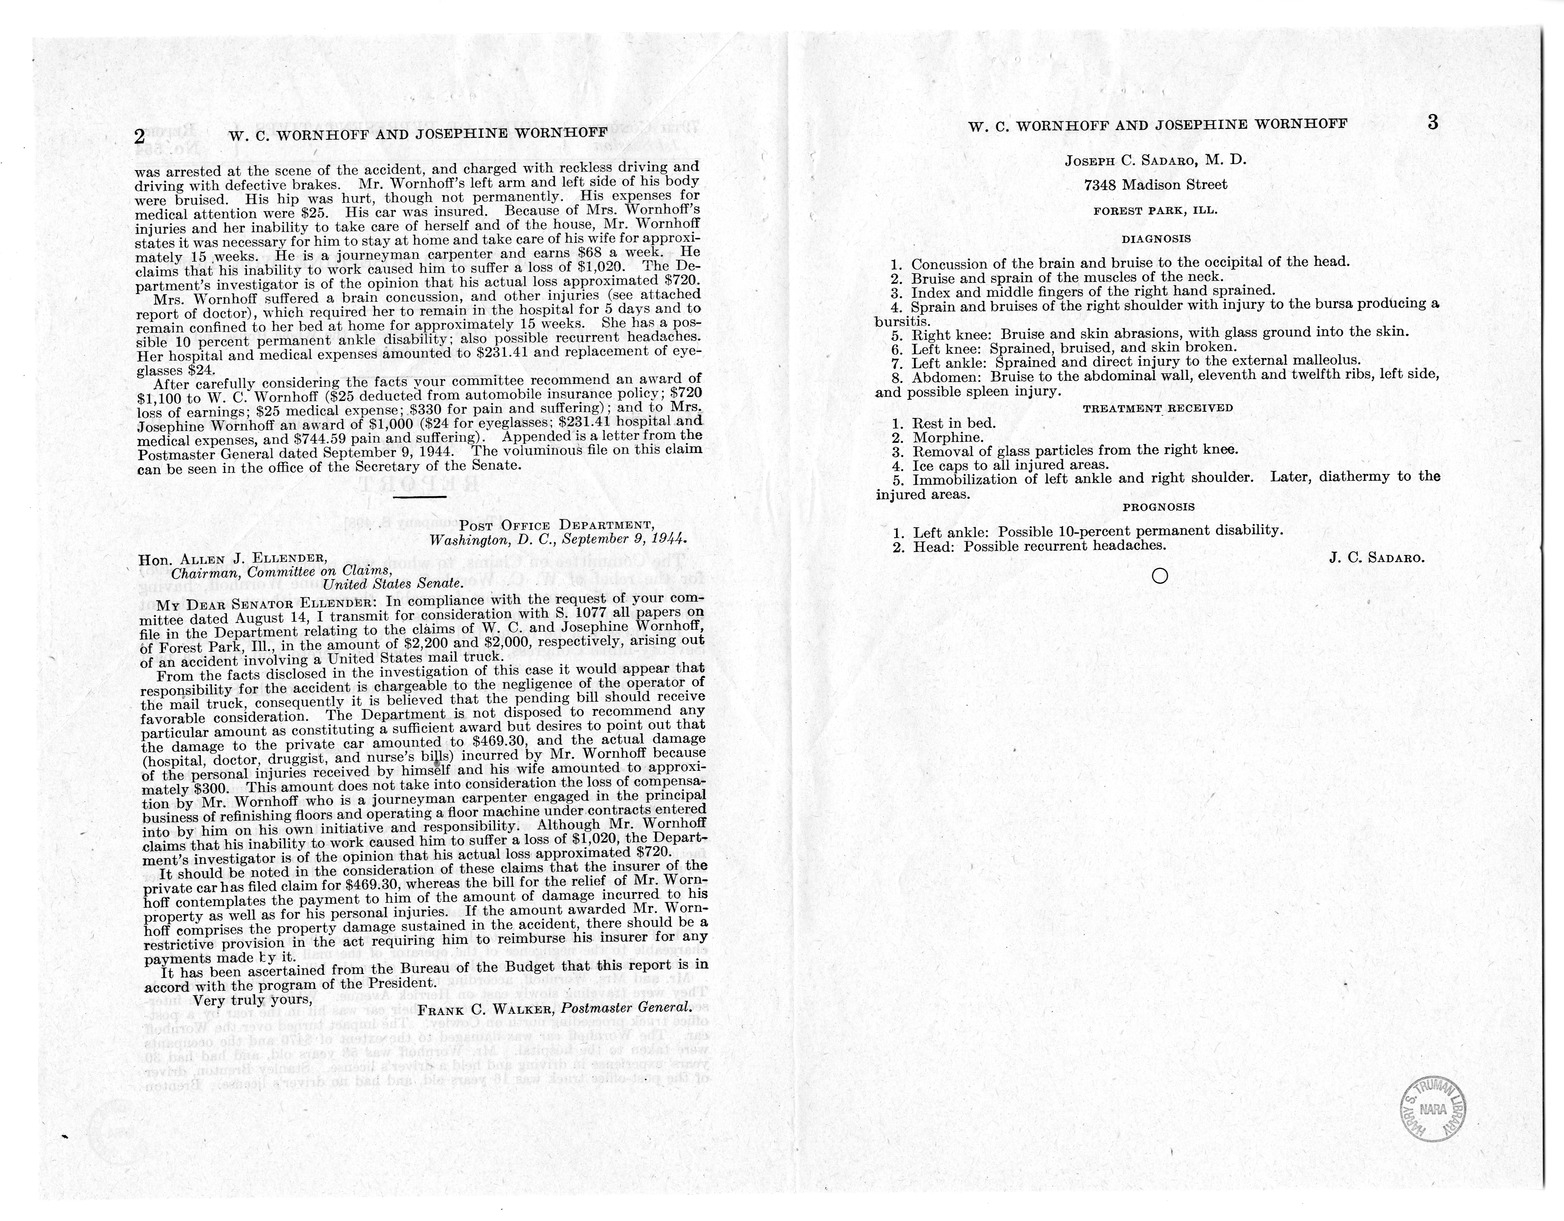 Memorandum from Frederick J. Bailey to M. C. Latta, S. 498, For the Relief of W. C. Wornhoff and Josephine Wornhoff, with Attachments